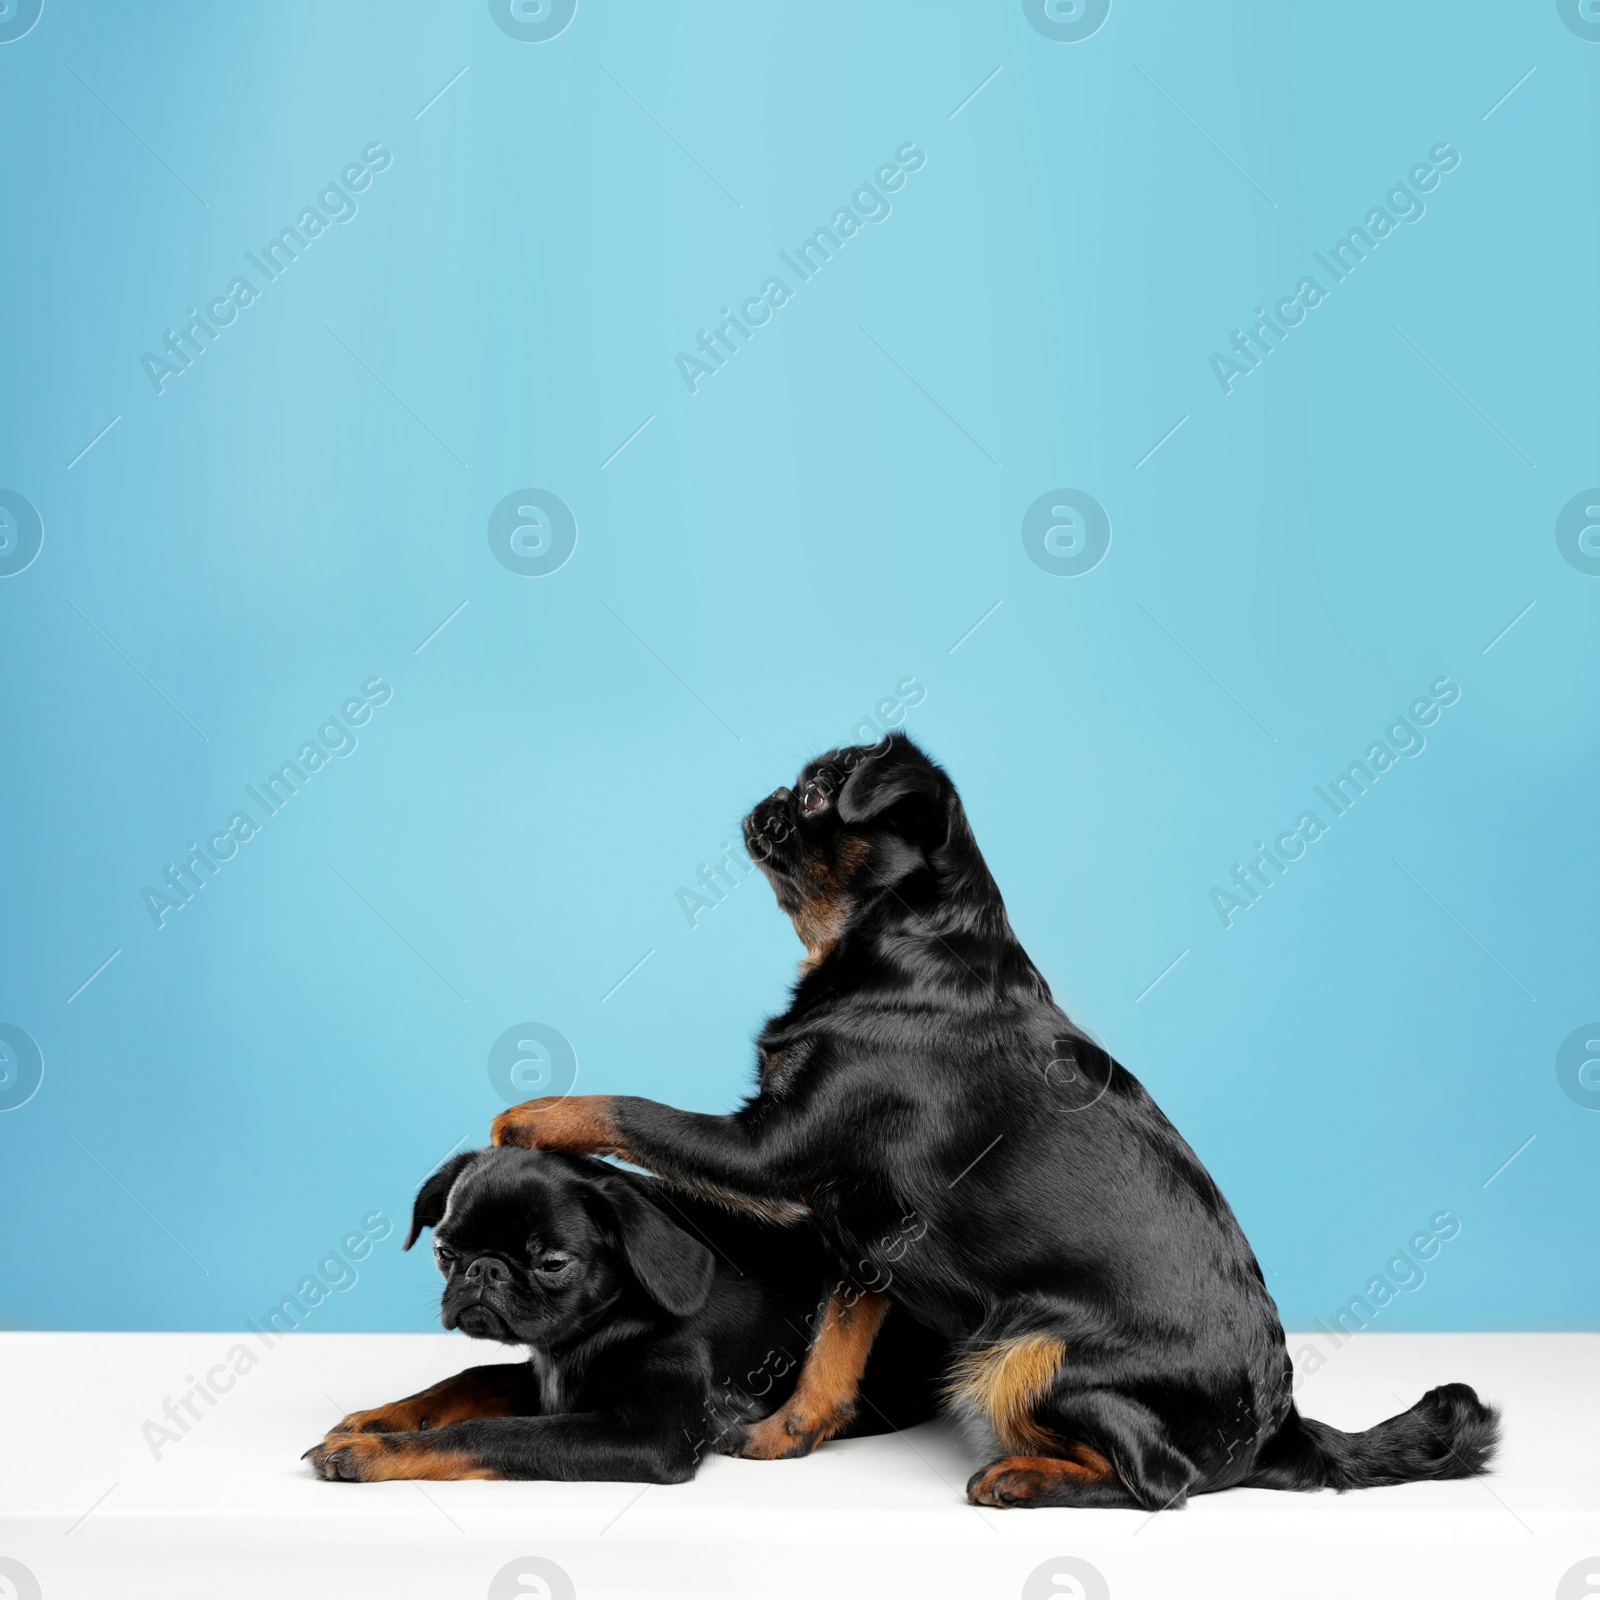 Photo of Adorable black Petit Brabancon dogs on white table against light blue background